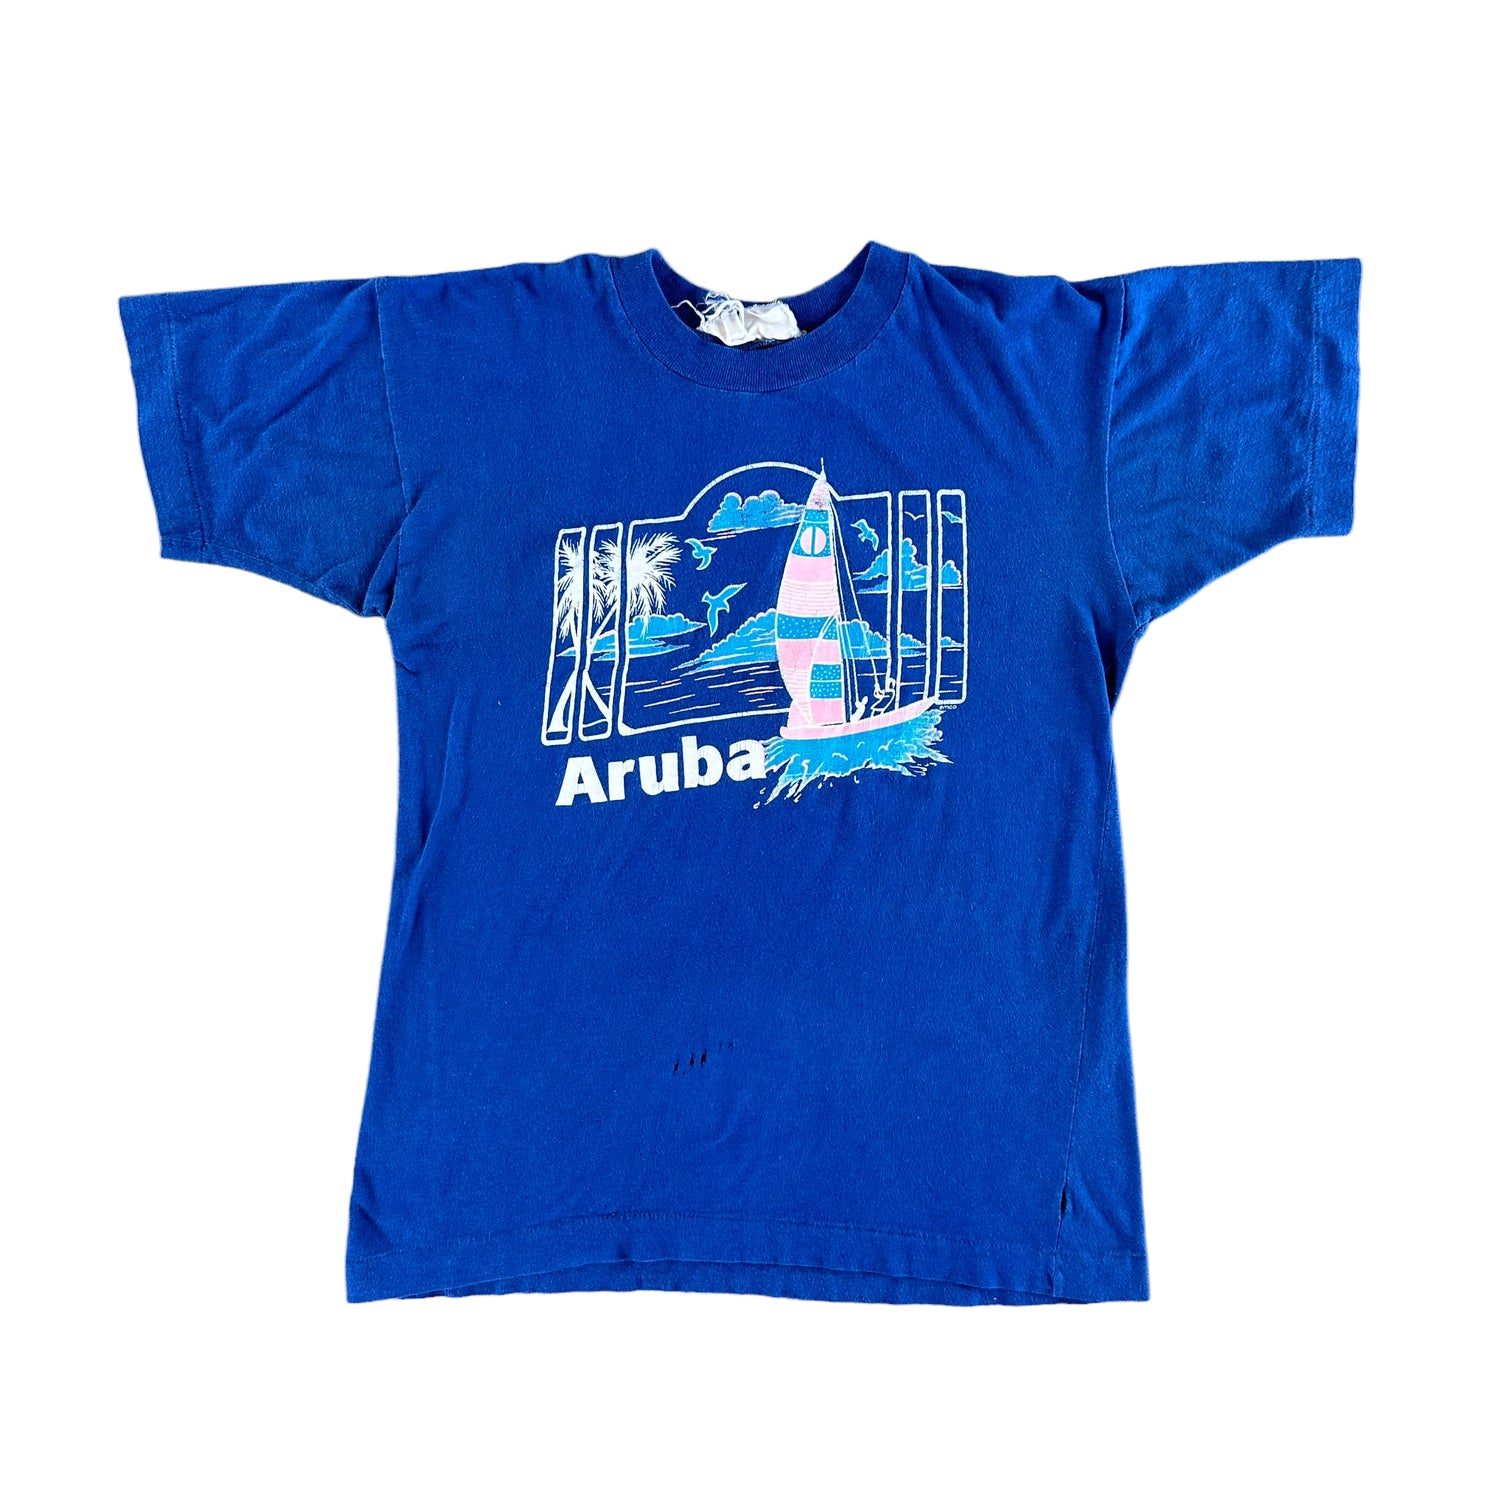 Vintage 1980s Aruba T-shirt size Medium